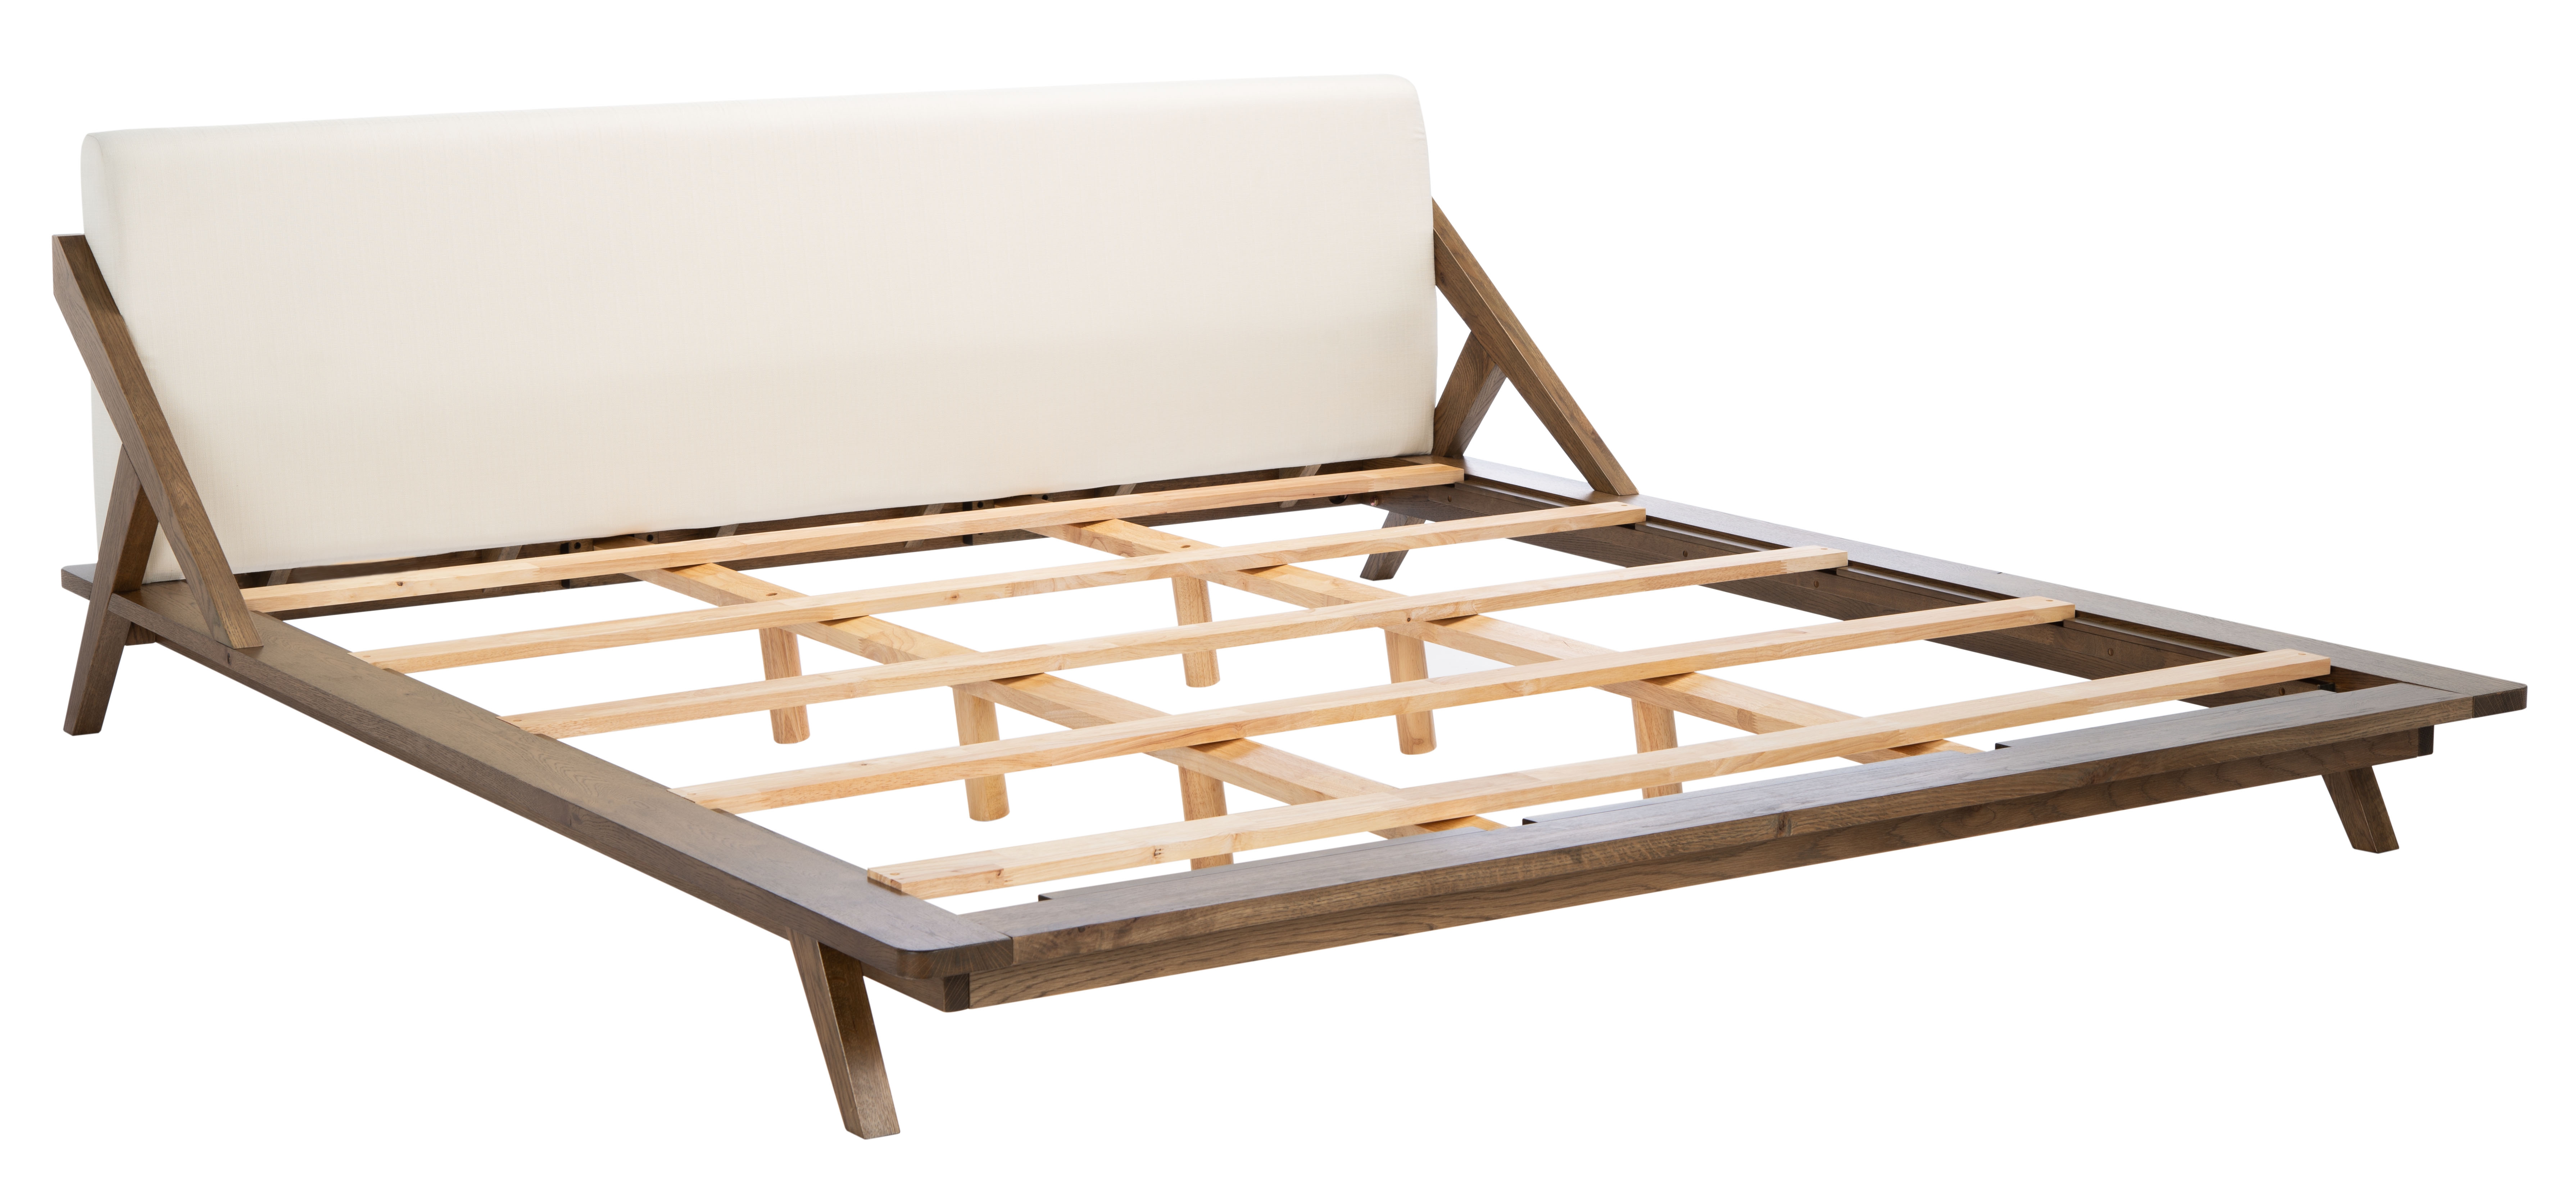 Devyn Wood Platform Bed - Natural/Beige - Arlo Home - Image 2